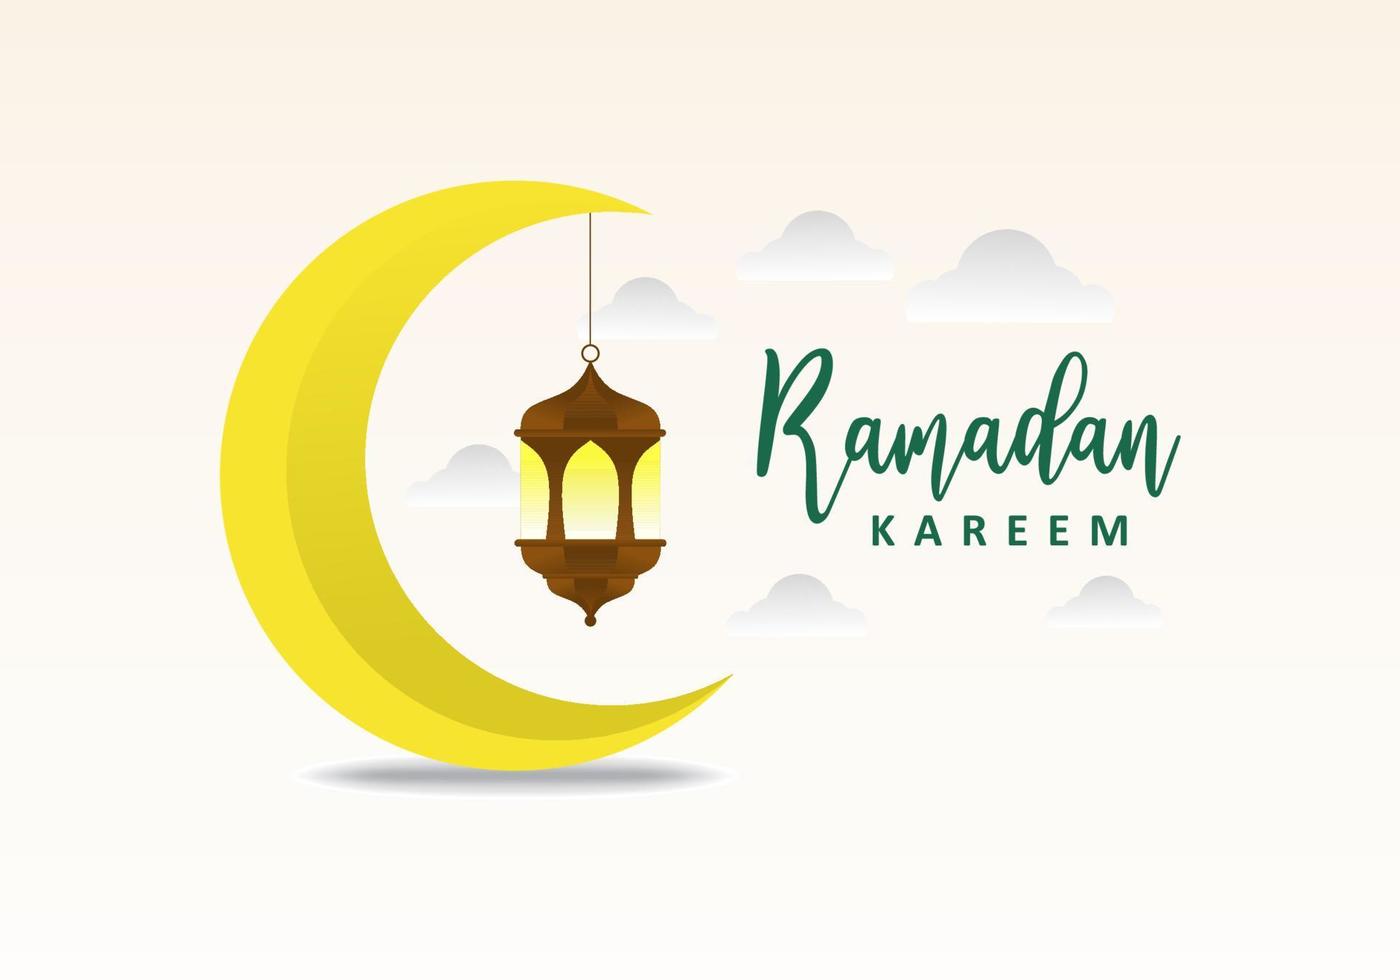 Ramadan kareem greeting card with yellow moon and lantern. vector